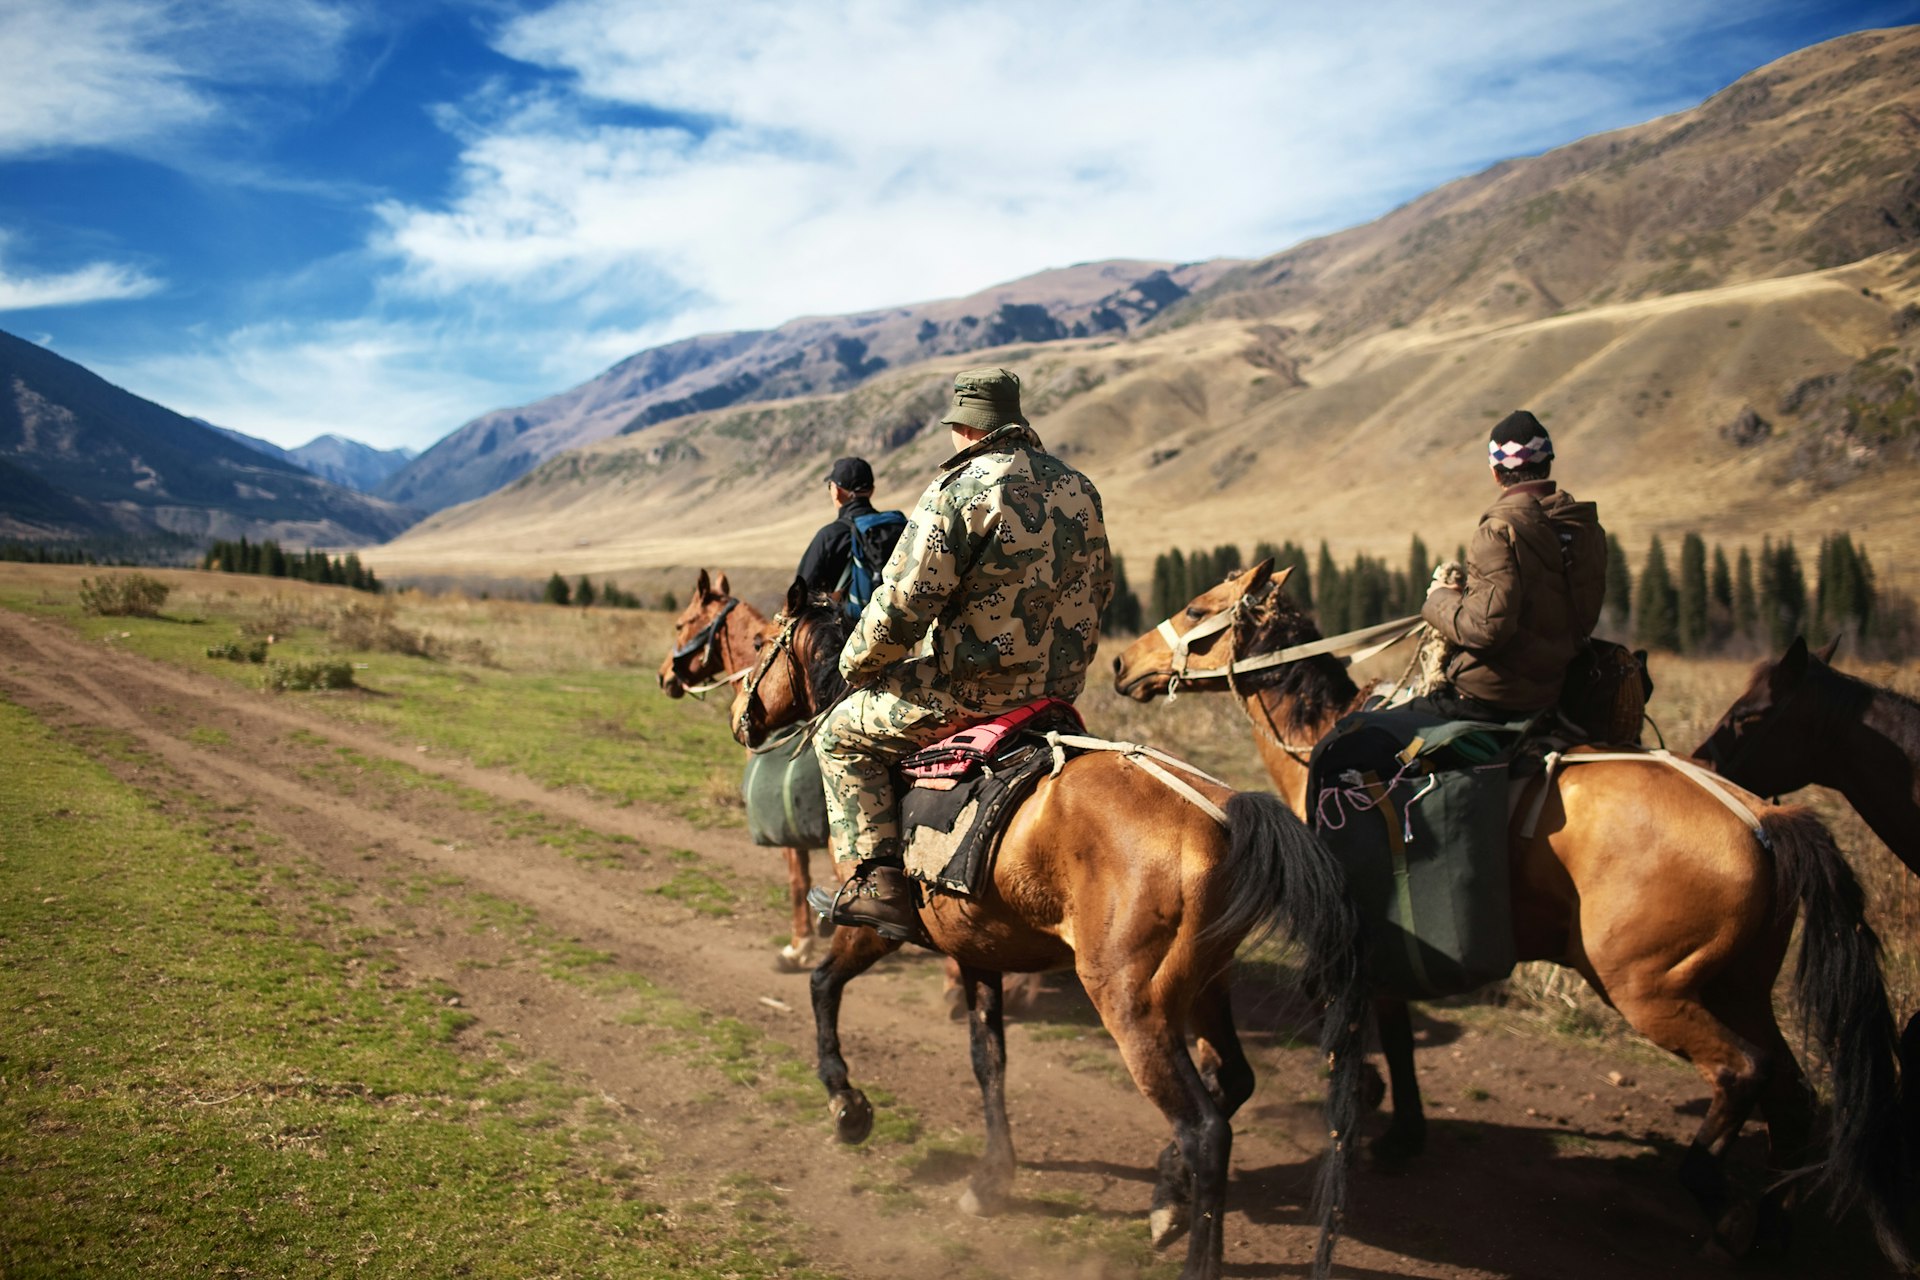 Men on horseback riding in the mountains of Kazakhstan